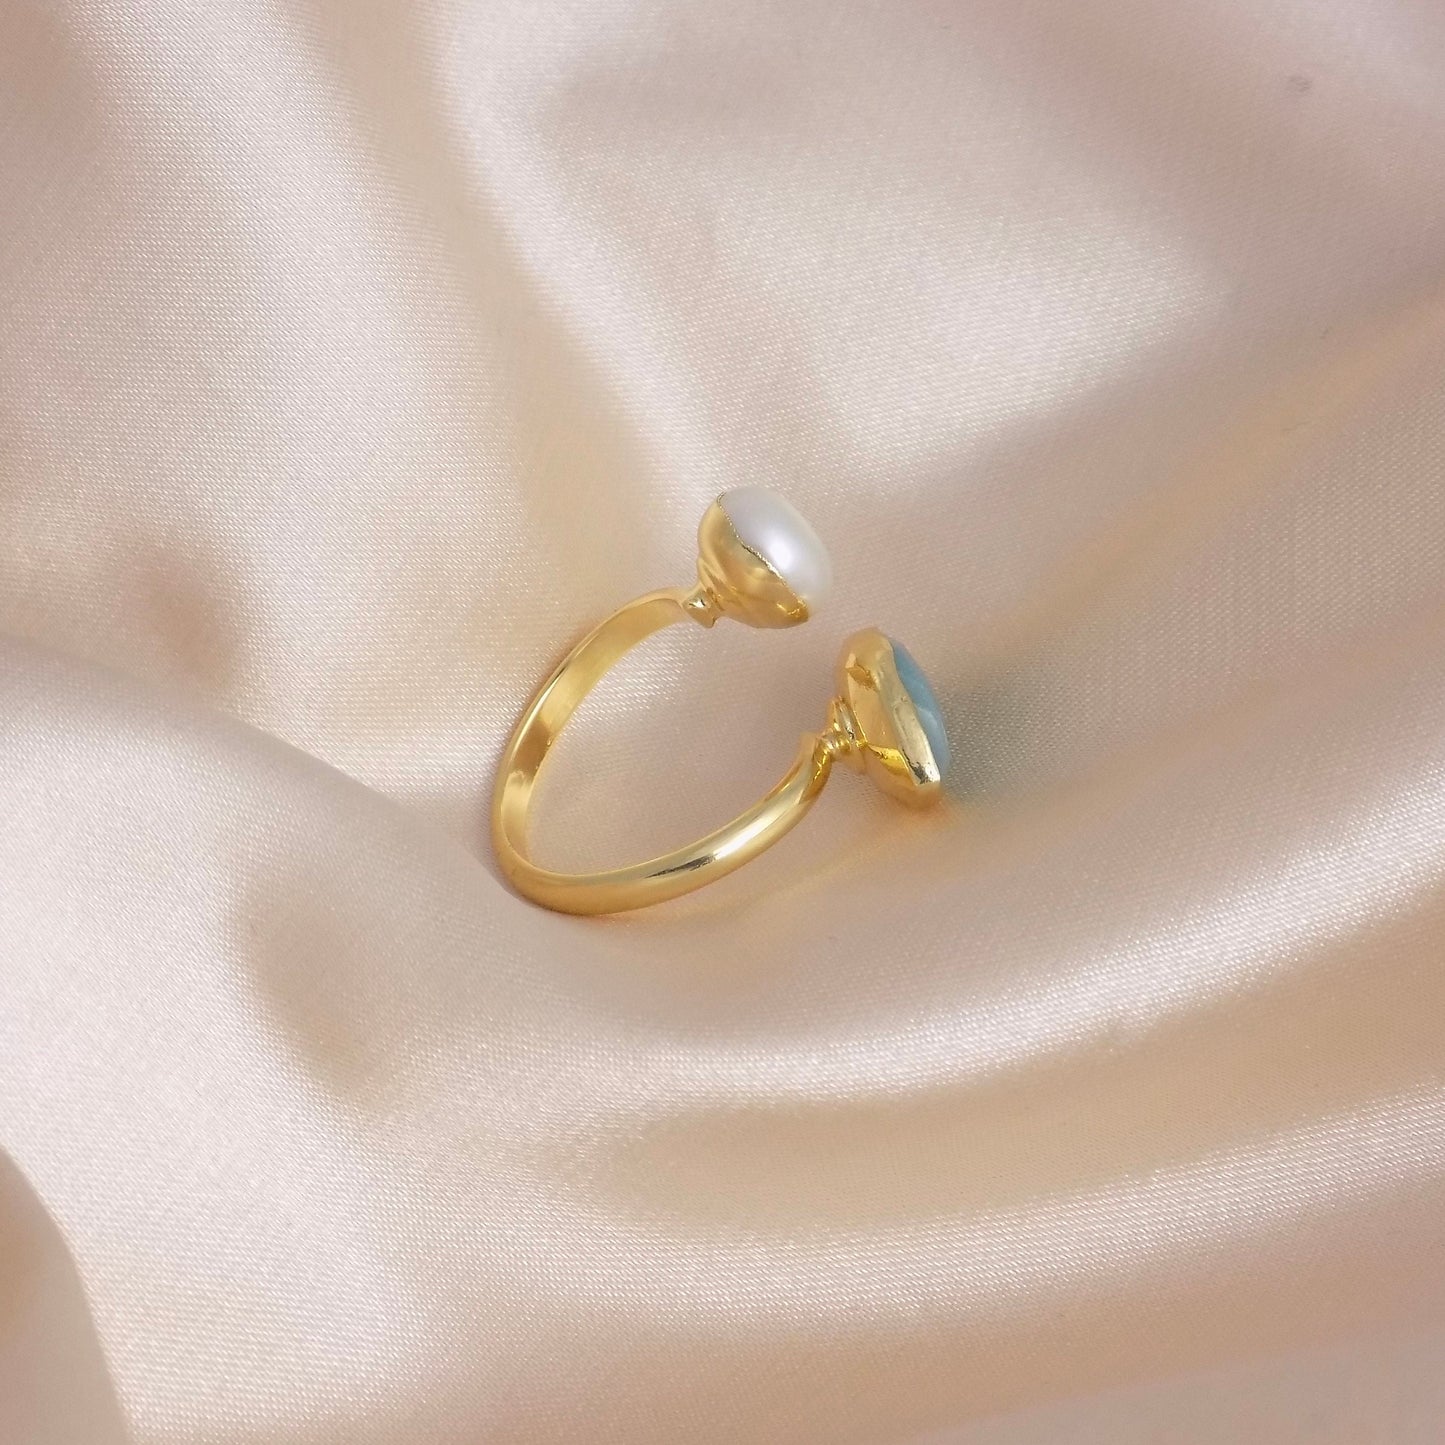 Amazonite Ring, Freshwater Pearl Ring, Gold Adjustable Multistone Statement Rings, Gift Women, M6-739